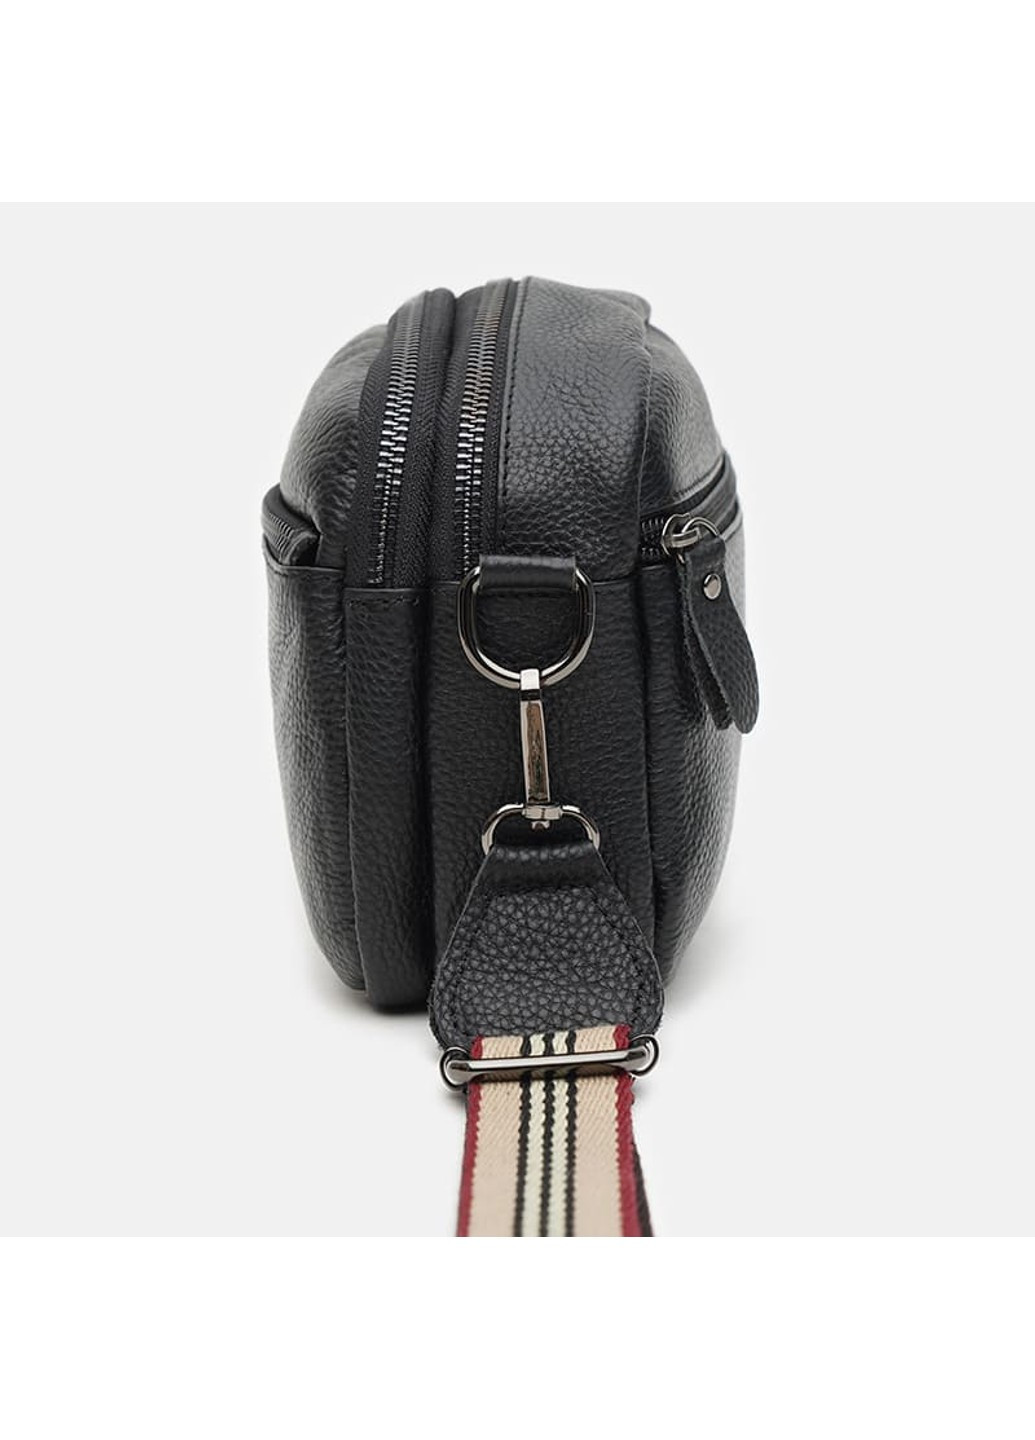 Женская кожаная сумка K11208-black Keizer (266144057)